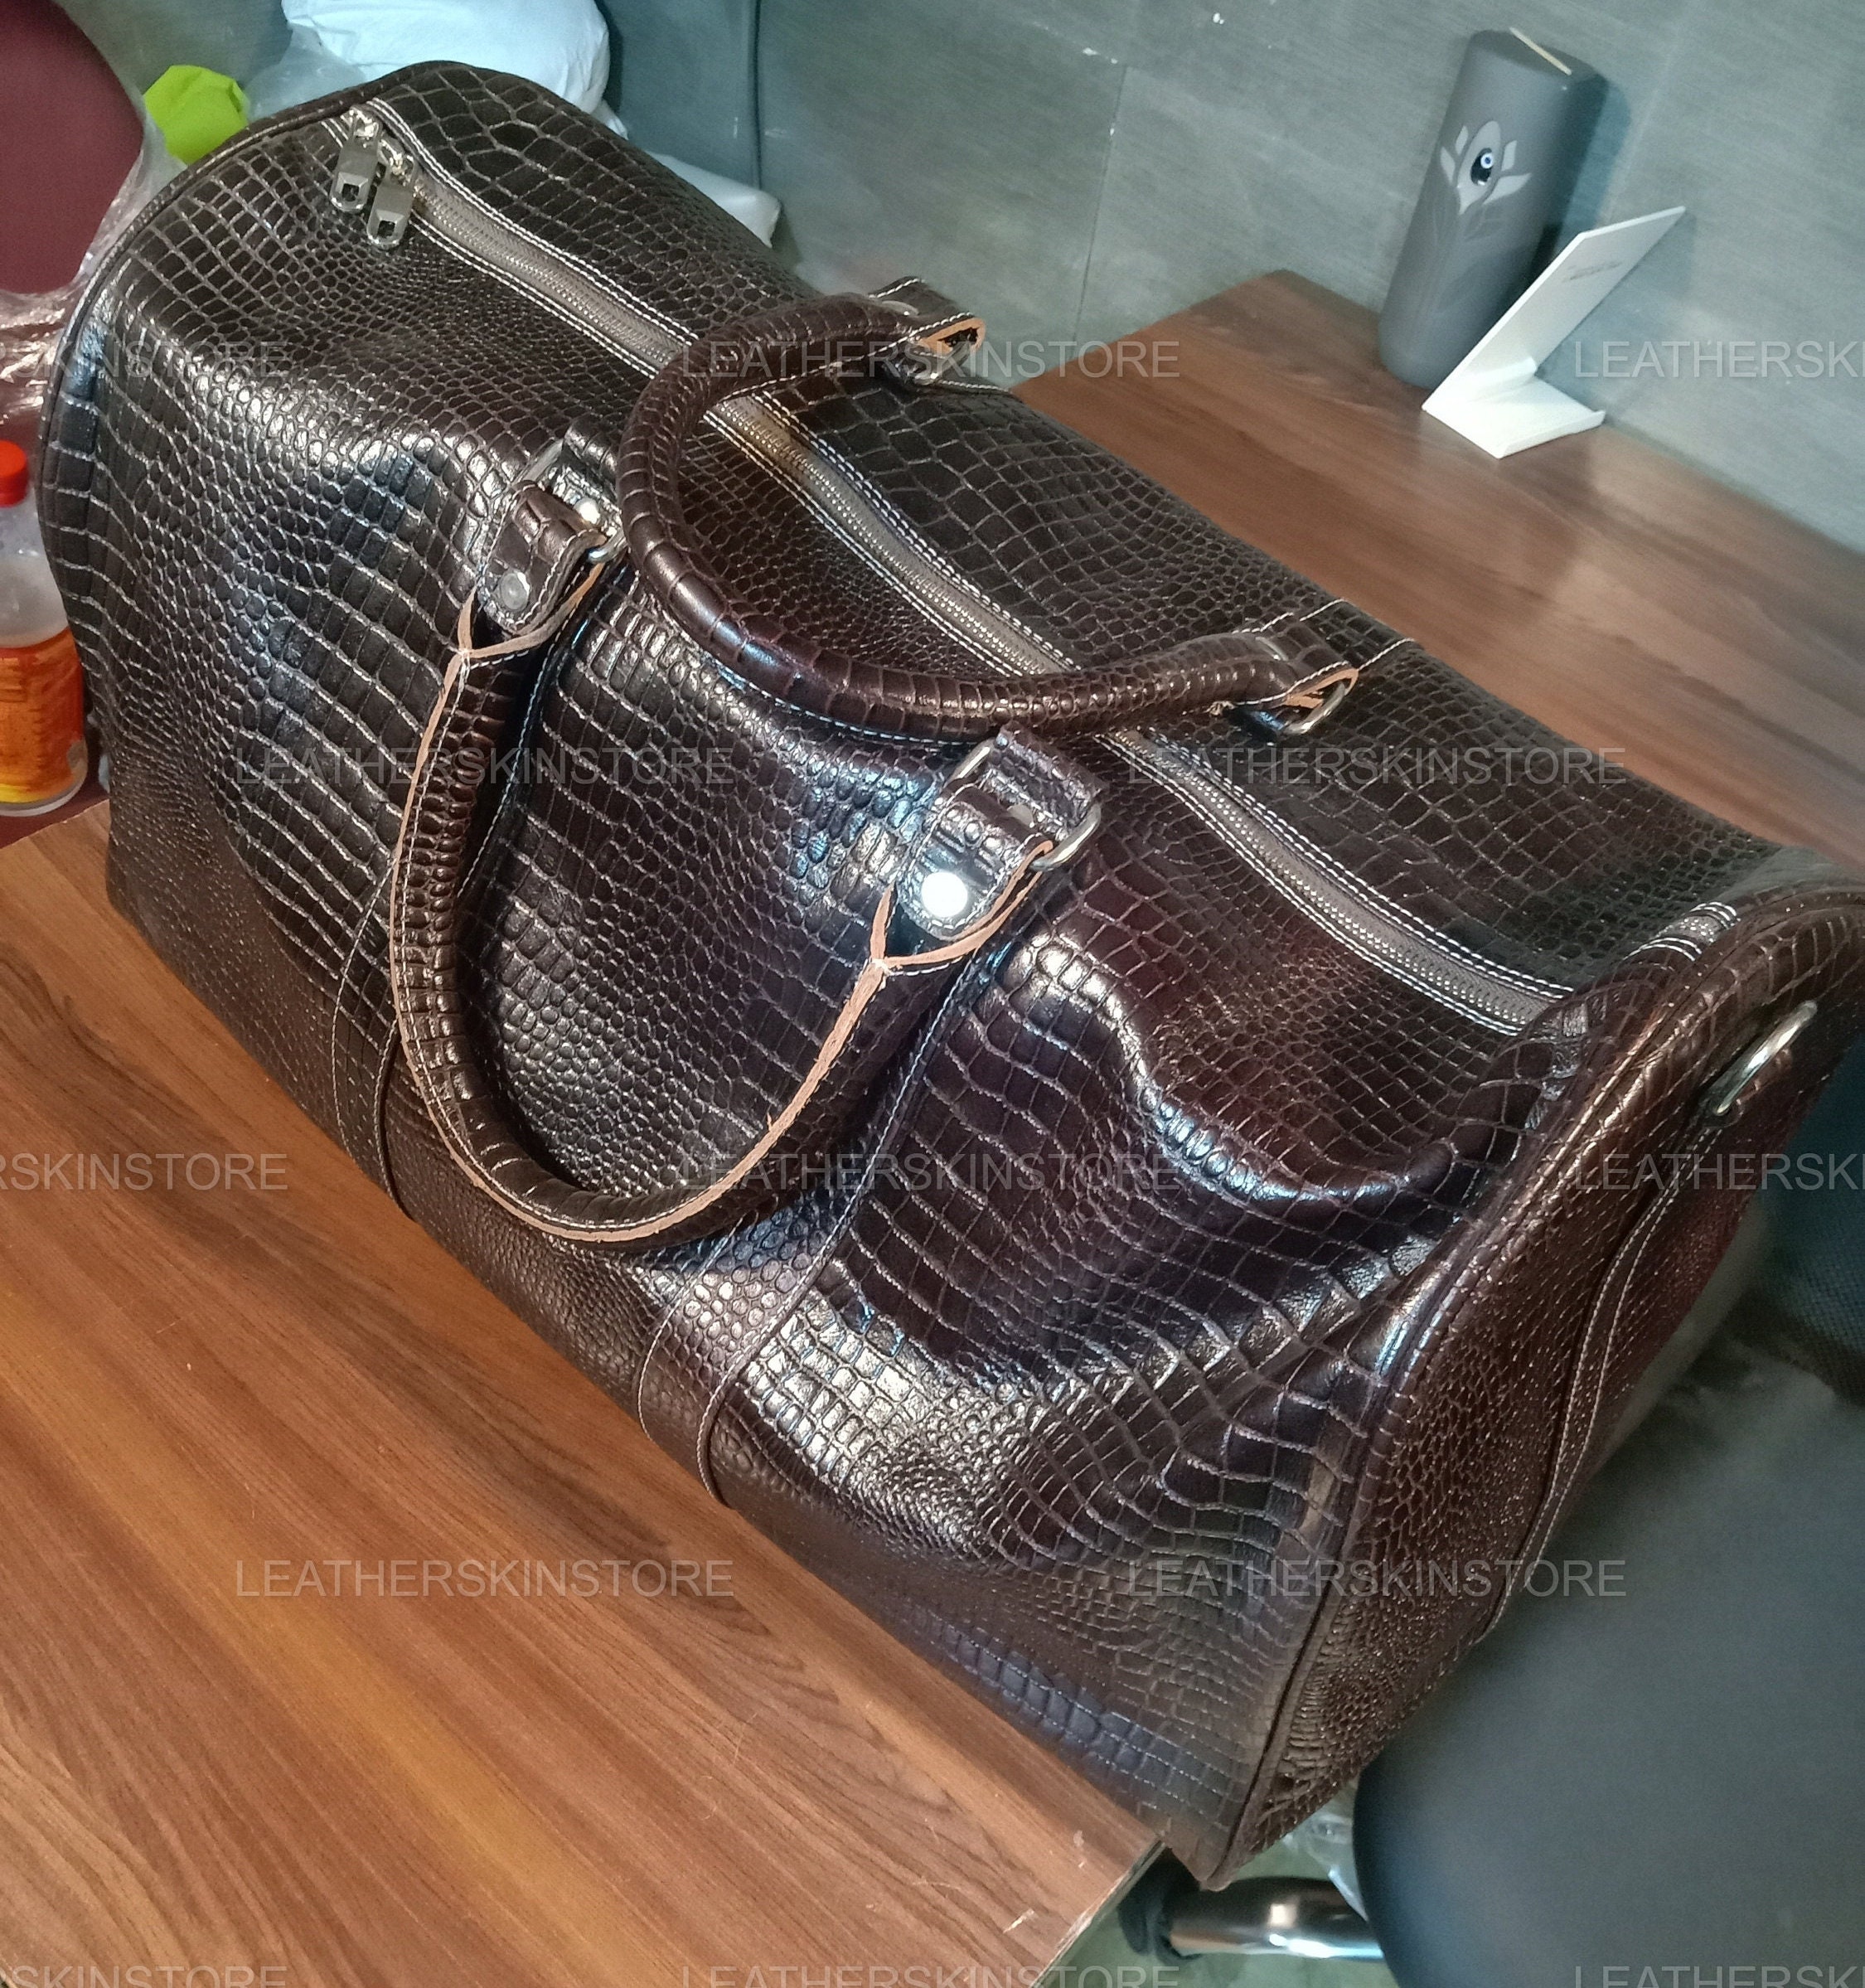 Crocodile Leather Travel Weekender Overnight Duffel Bag